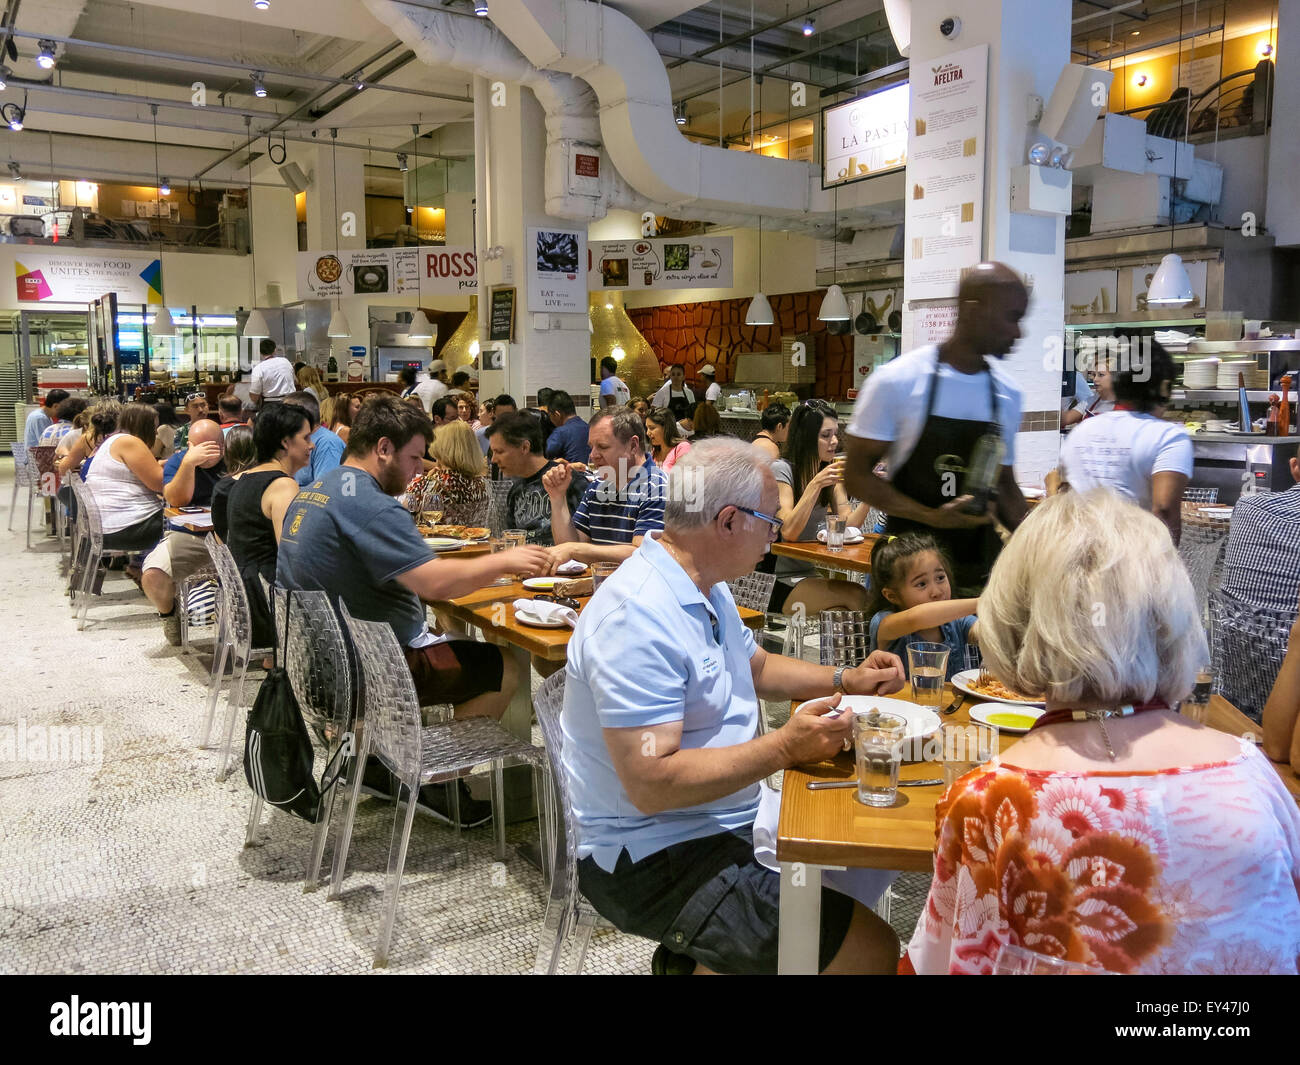 Diners at restaurant, Eataly Italian Marketplace, NYC Stock Photo